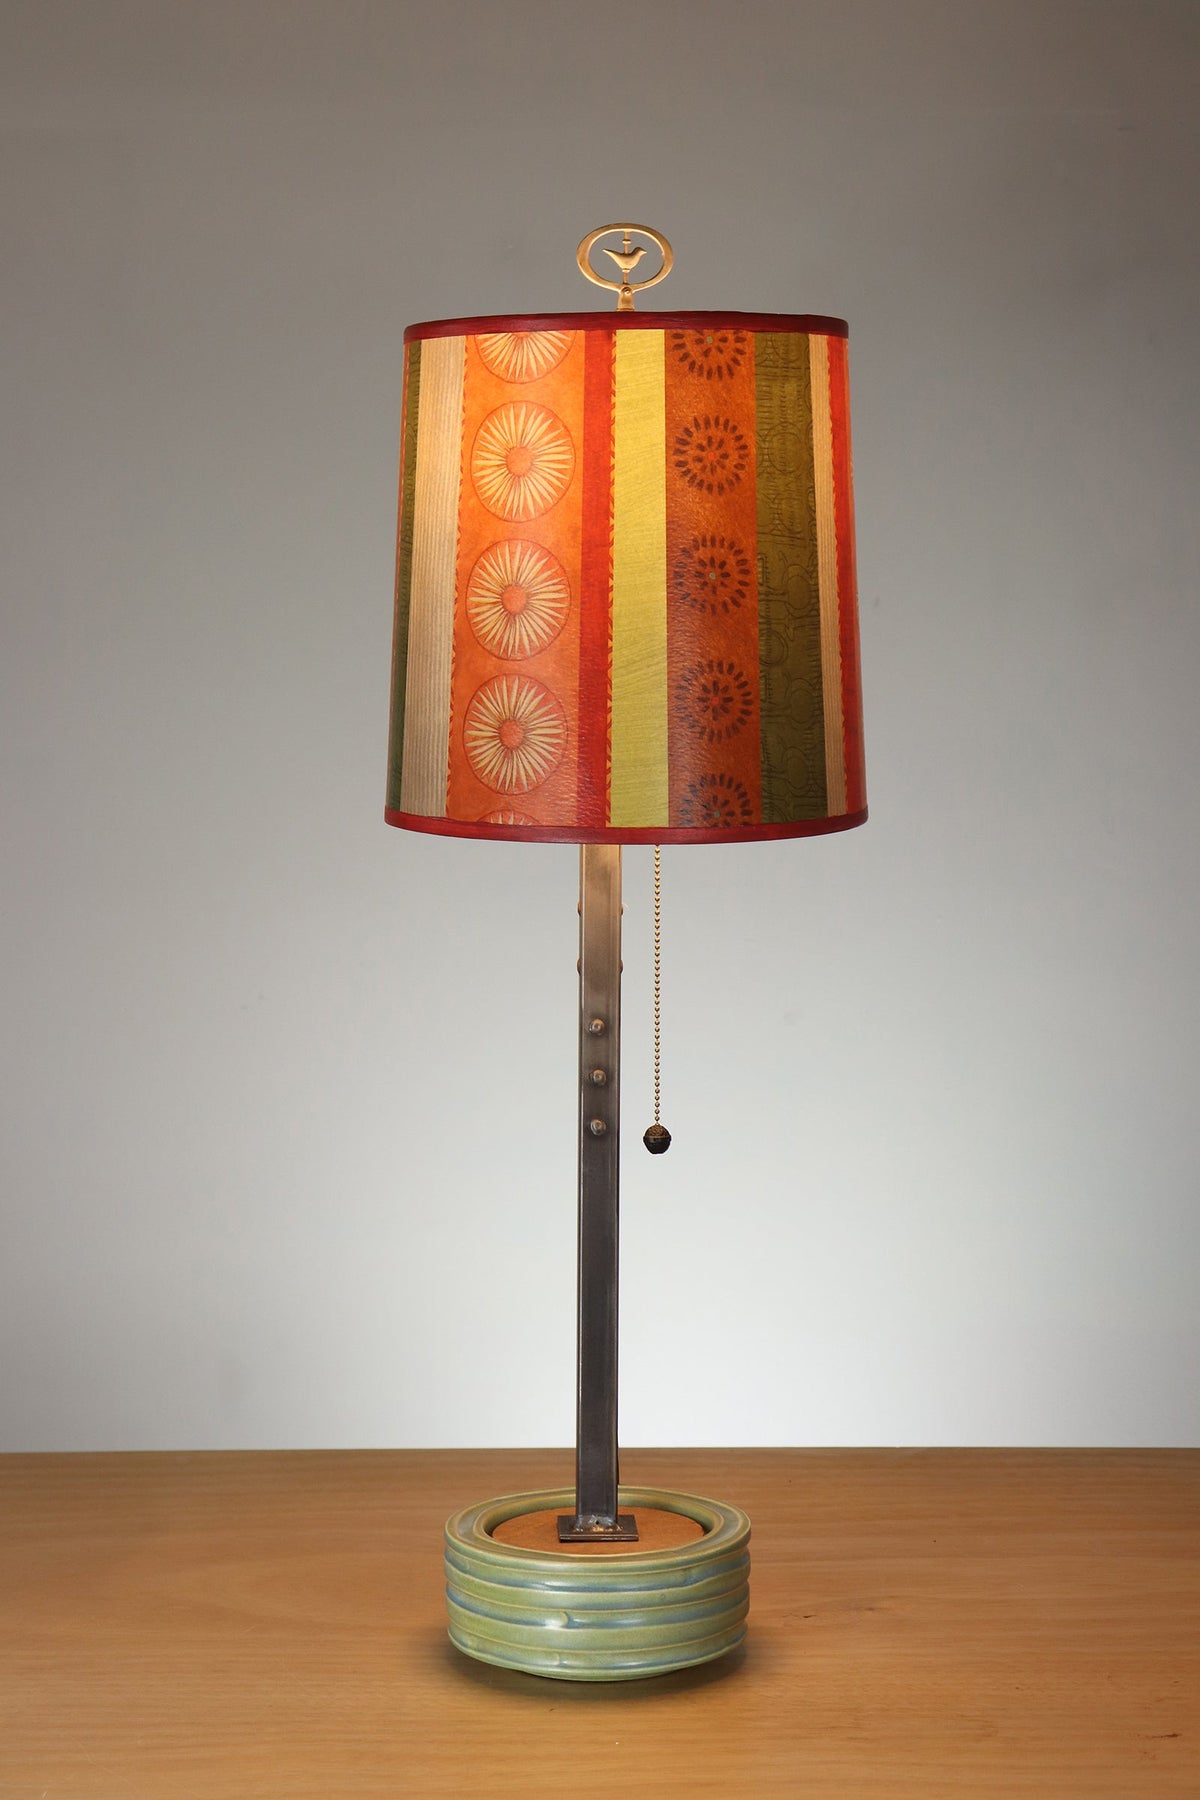 Limited Batch Steel &amp; Ceramic Table Lamp with Medium Drum Shade in Serape